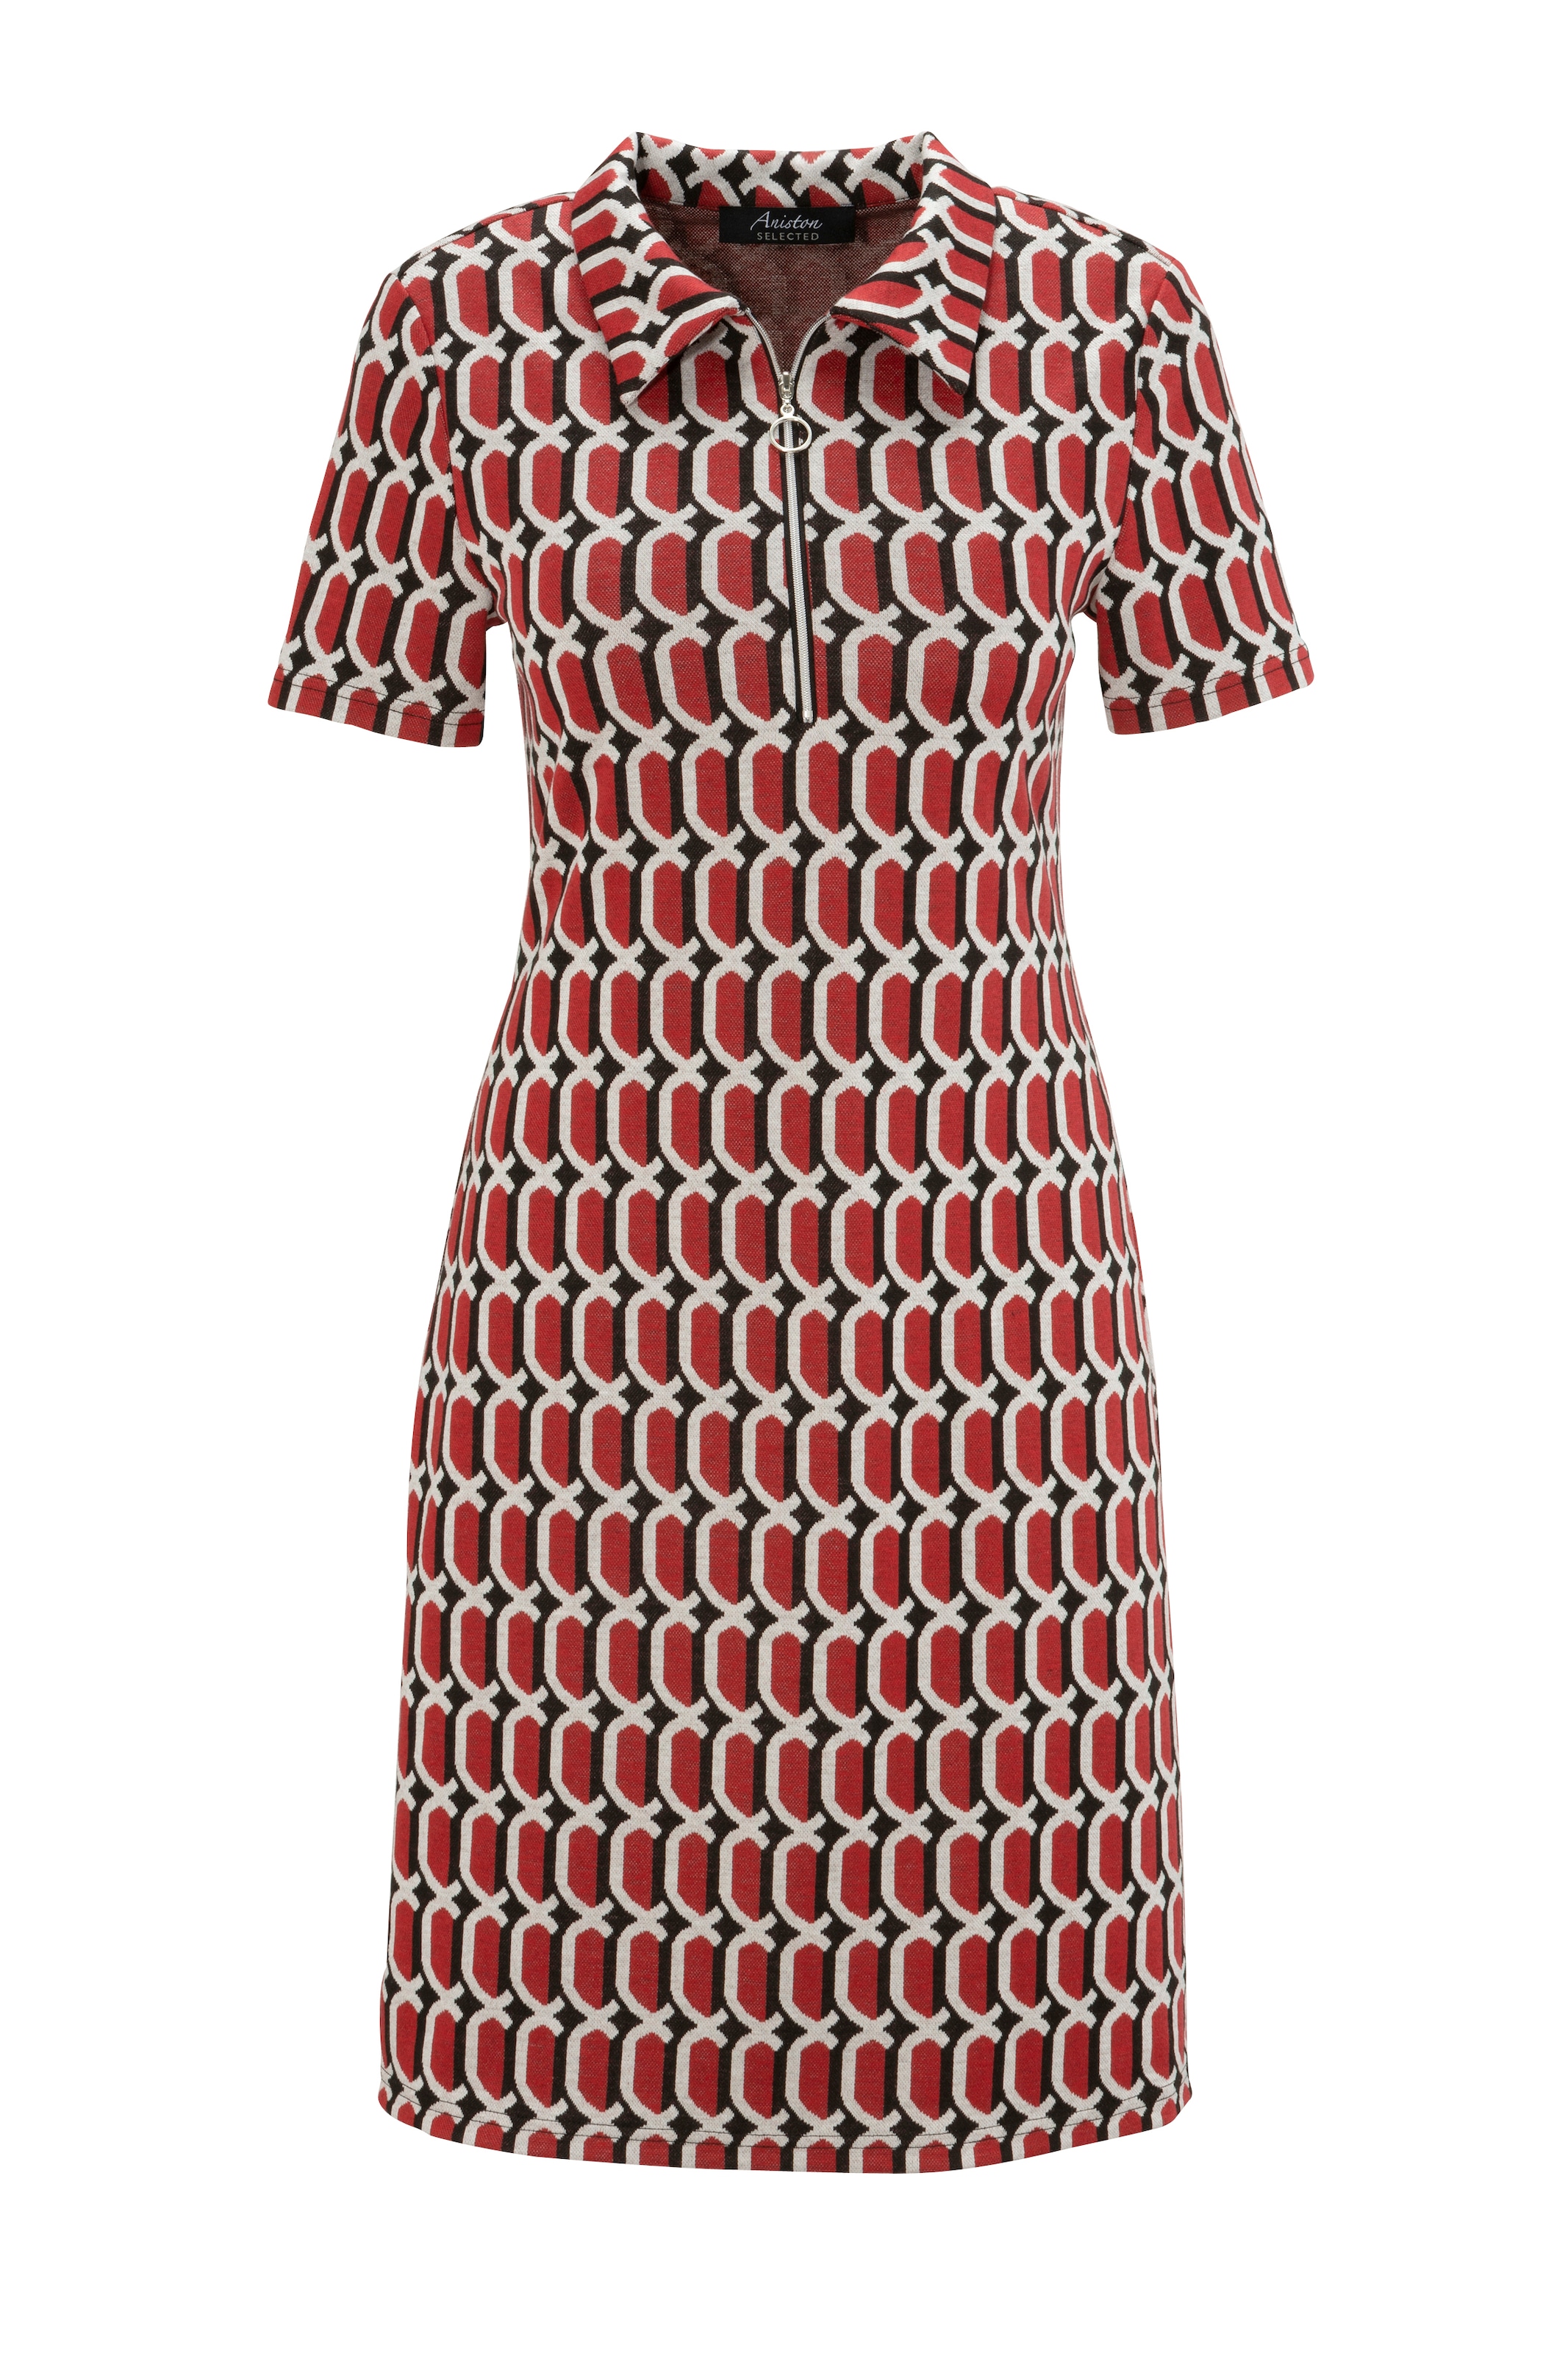 KOLLEKTION Reißverschluss kaufen mit Aniston SELECTED NEUE silberfarbenem - Jerseykleid,